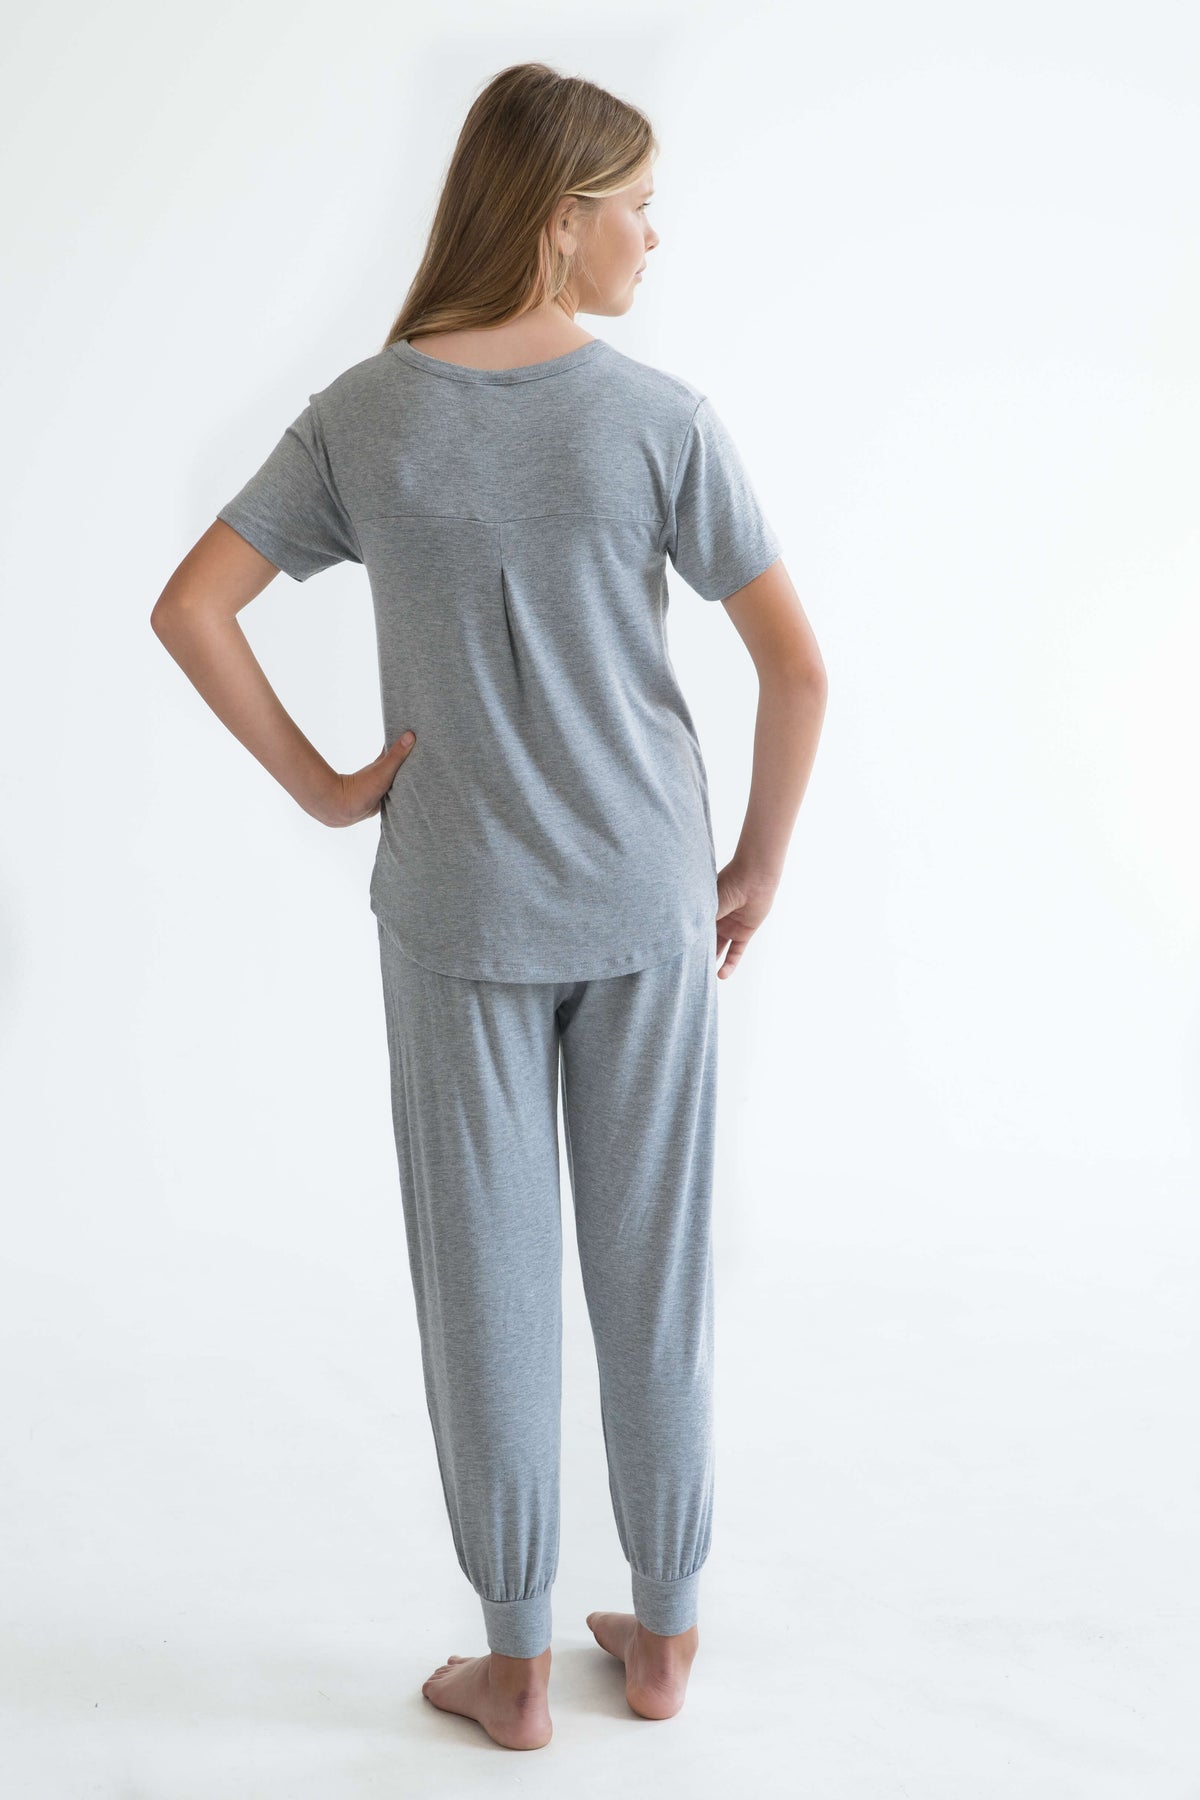 grey teen girls  short sleeve bamboo pyjama top by Love Haidee Australia back view Chloe